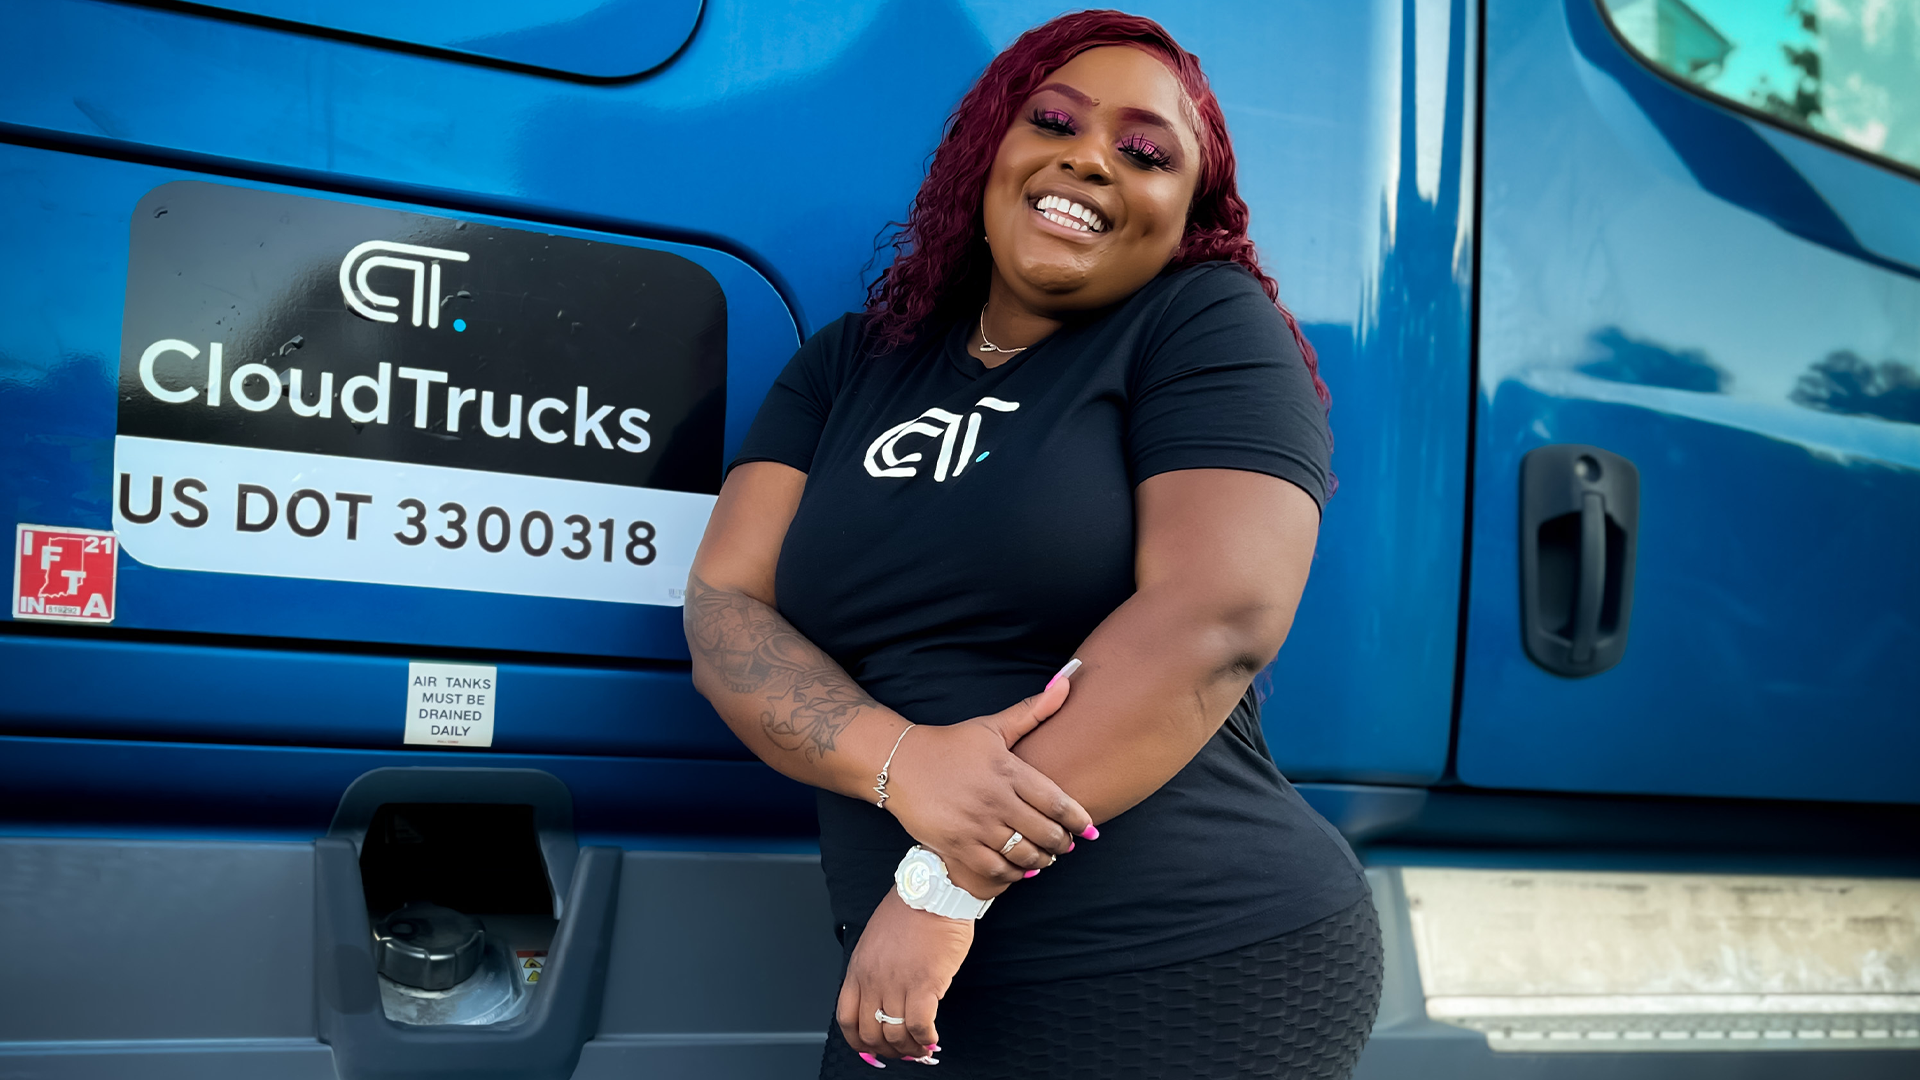 Meet Clarissa Rankin, The TikToker Who Says She's Raked In Over $140K Through Her Trucking Business